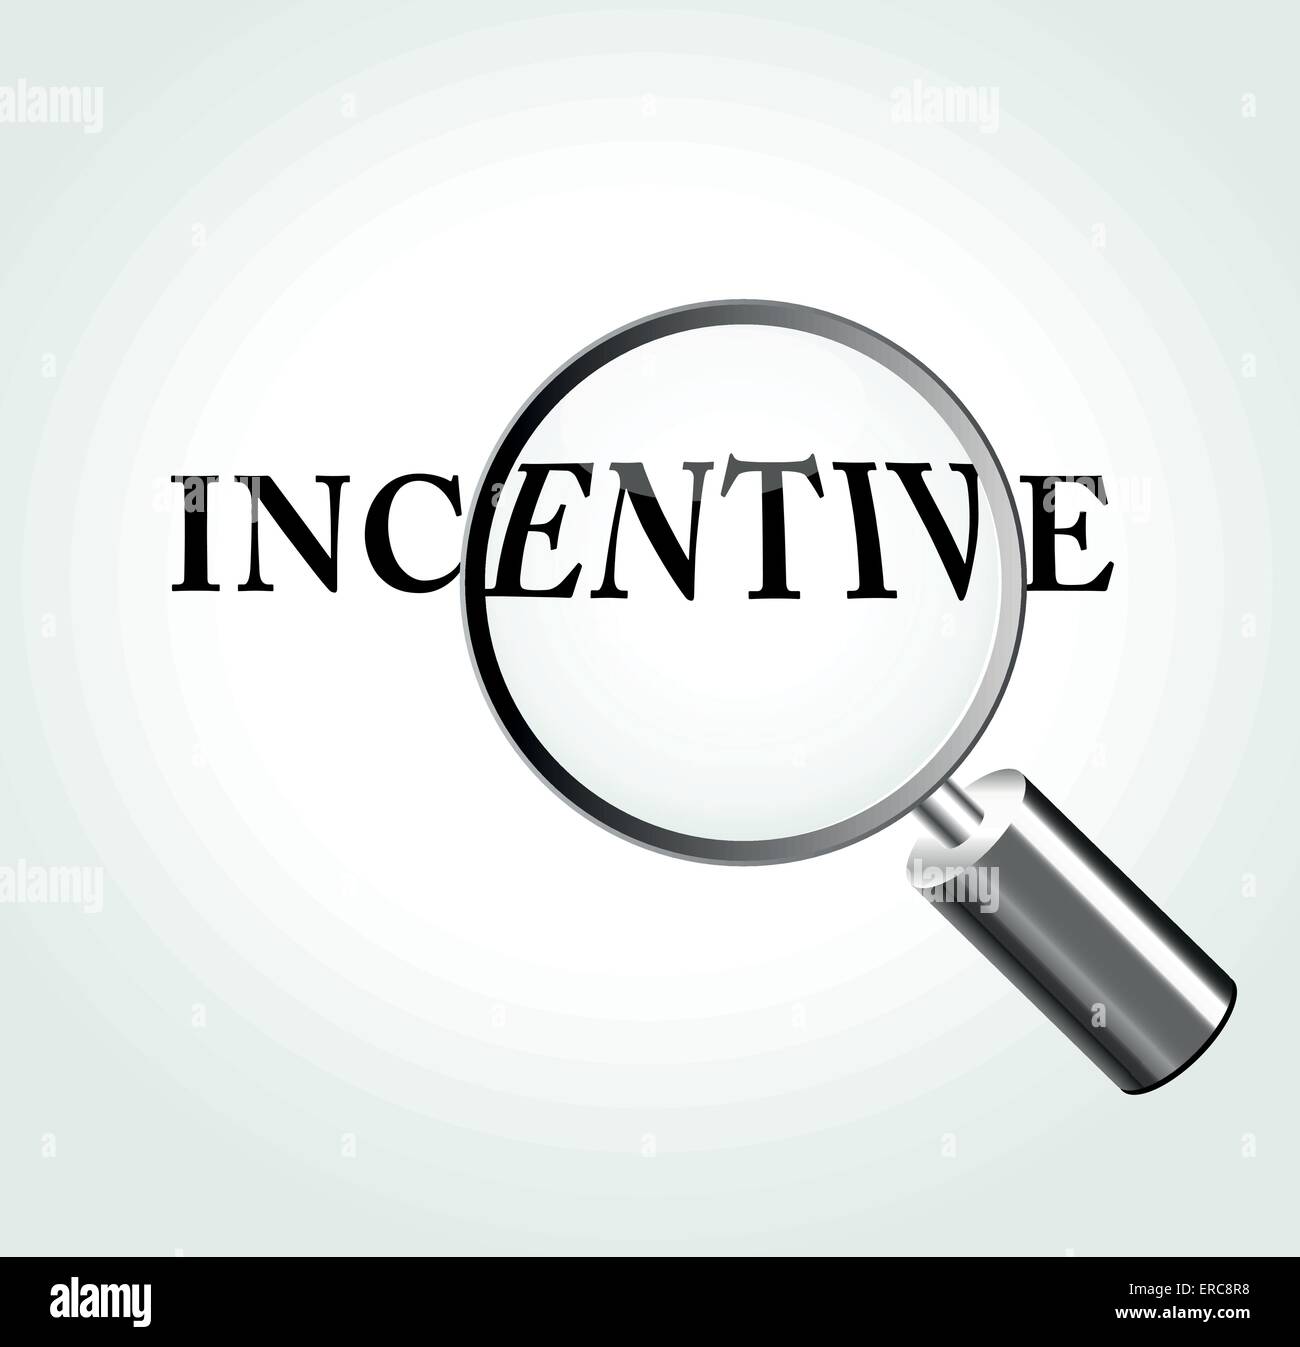 Vektor-Illustration von Incentive-Konzept mit Lupe Stock Vektor